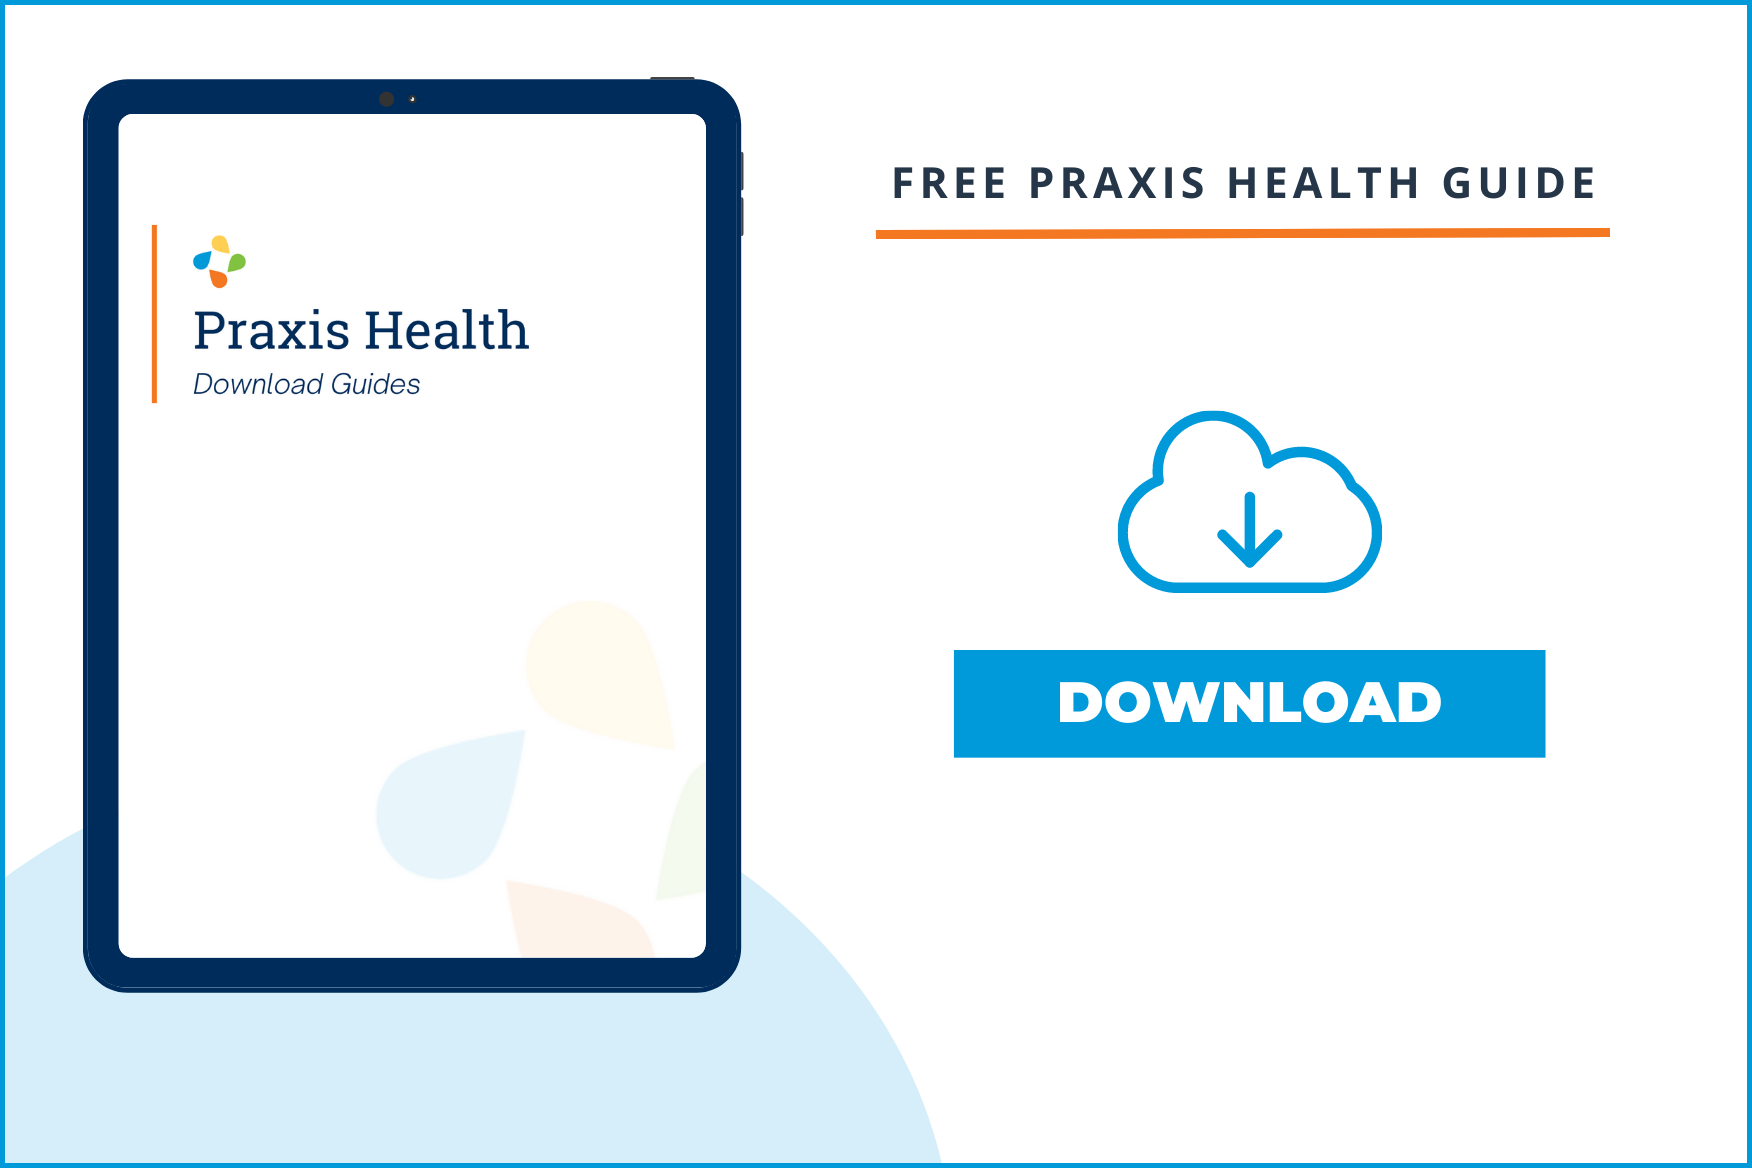 Free PRAXIS HEALTH guide download horizontal